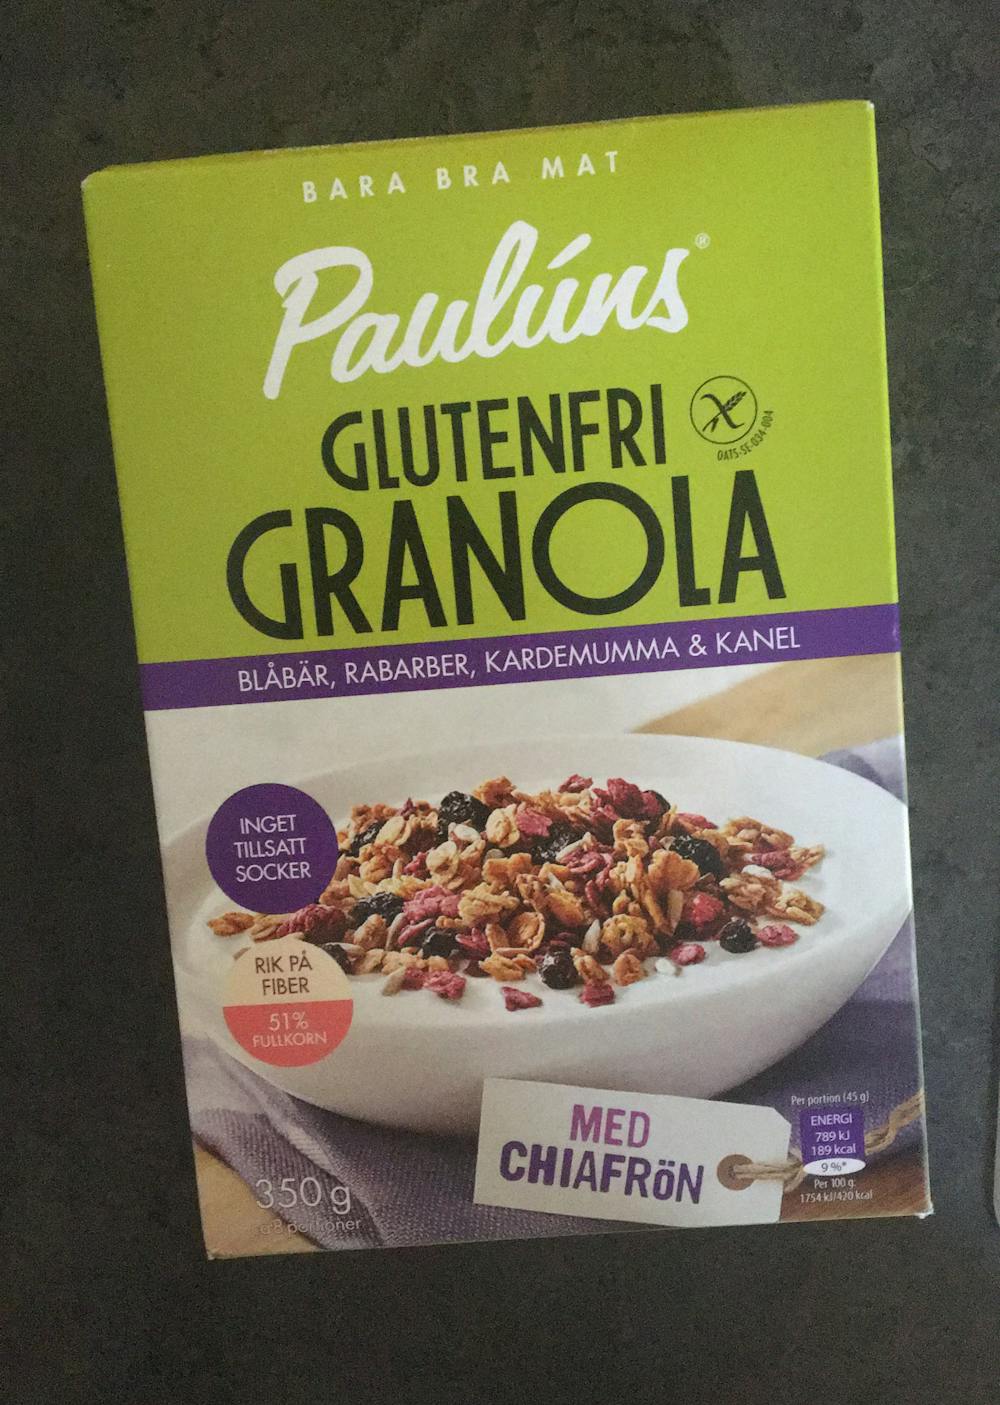 Glutenfri granola, Paulins